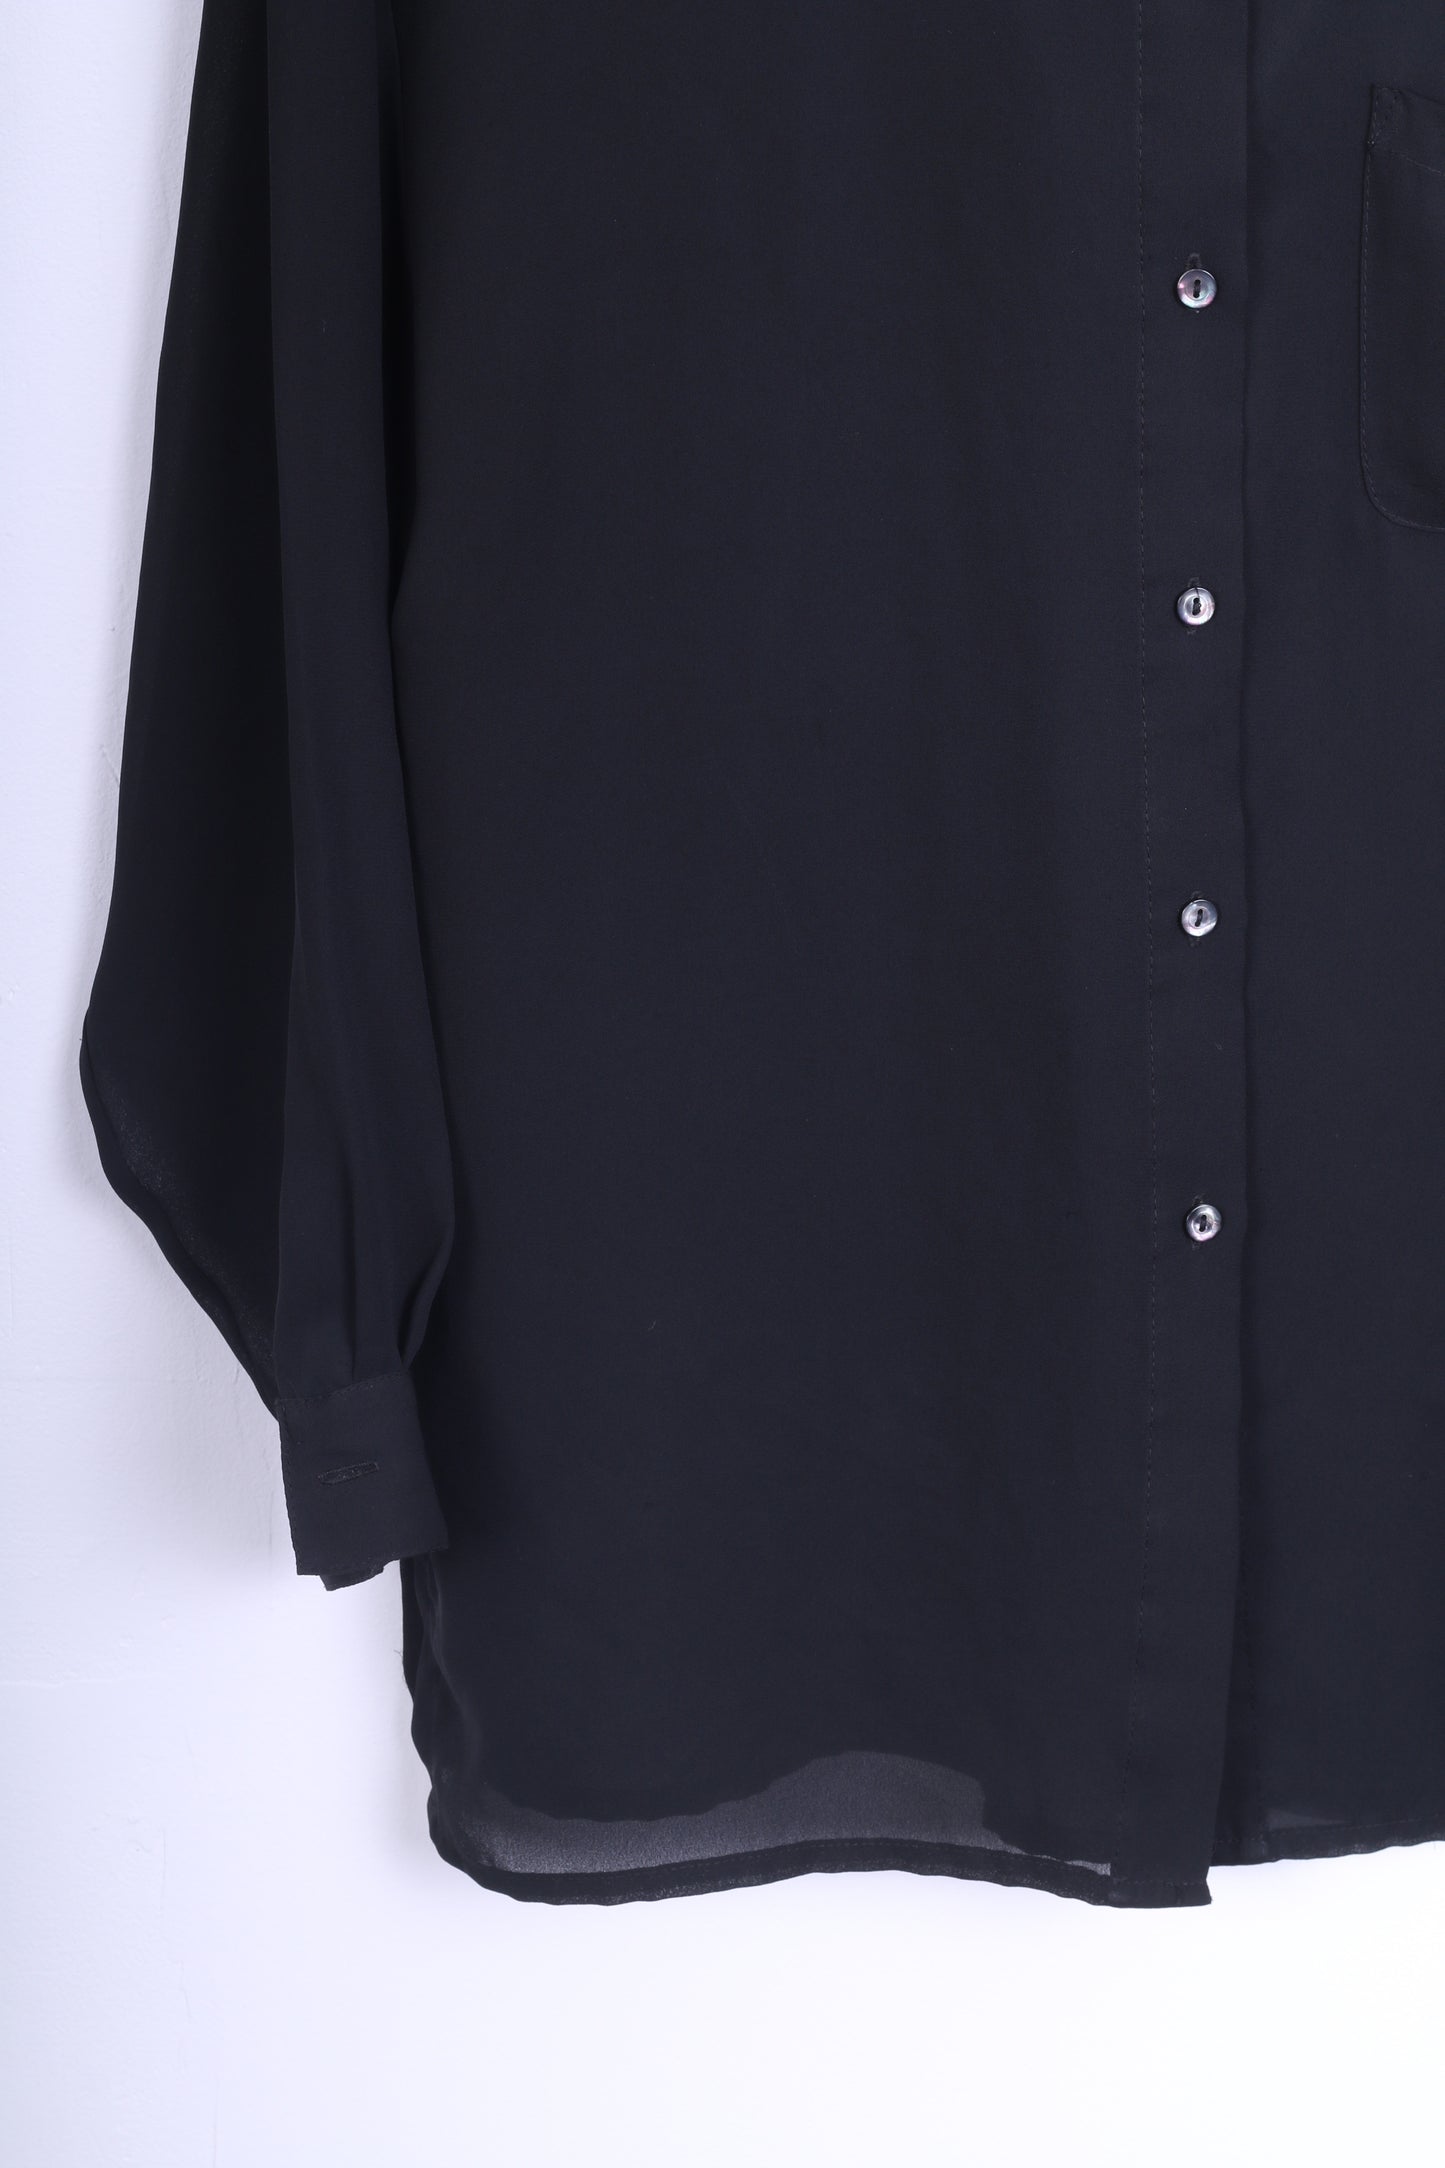 Next Womens M Casual Shirt Long Sleeve Black Transparent